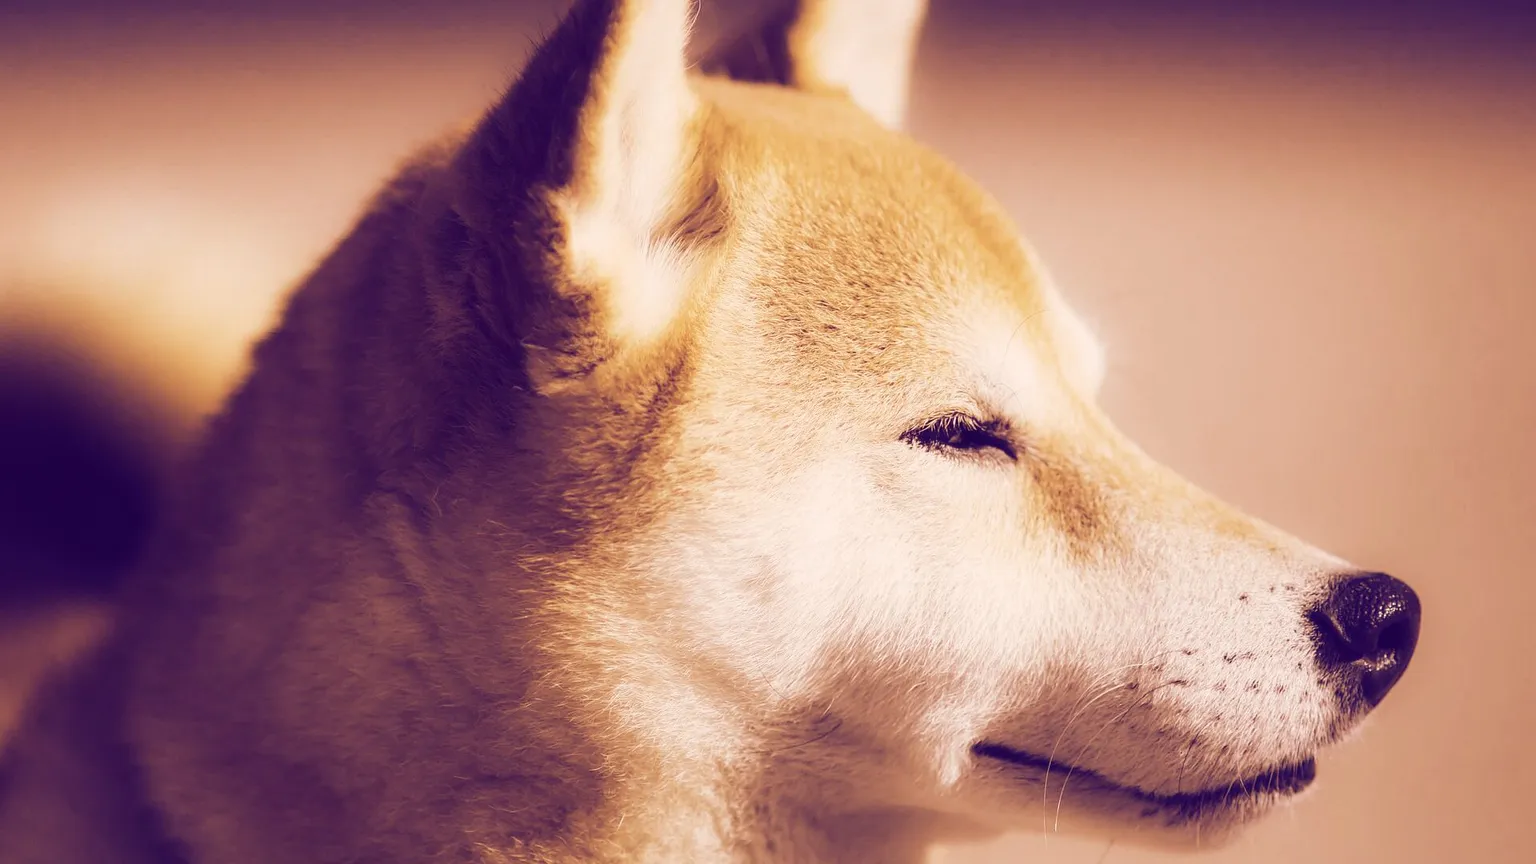 Dogecoin is based on the Shiba Inu breed. Image credit: Pixabay